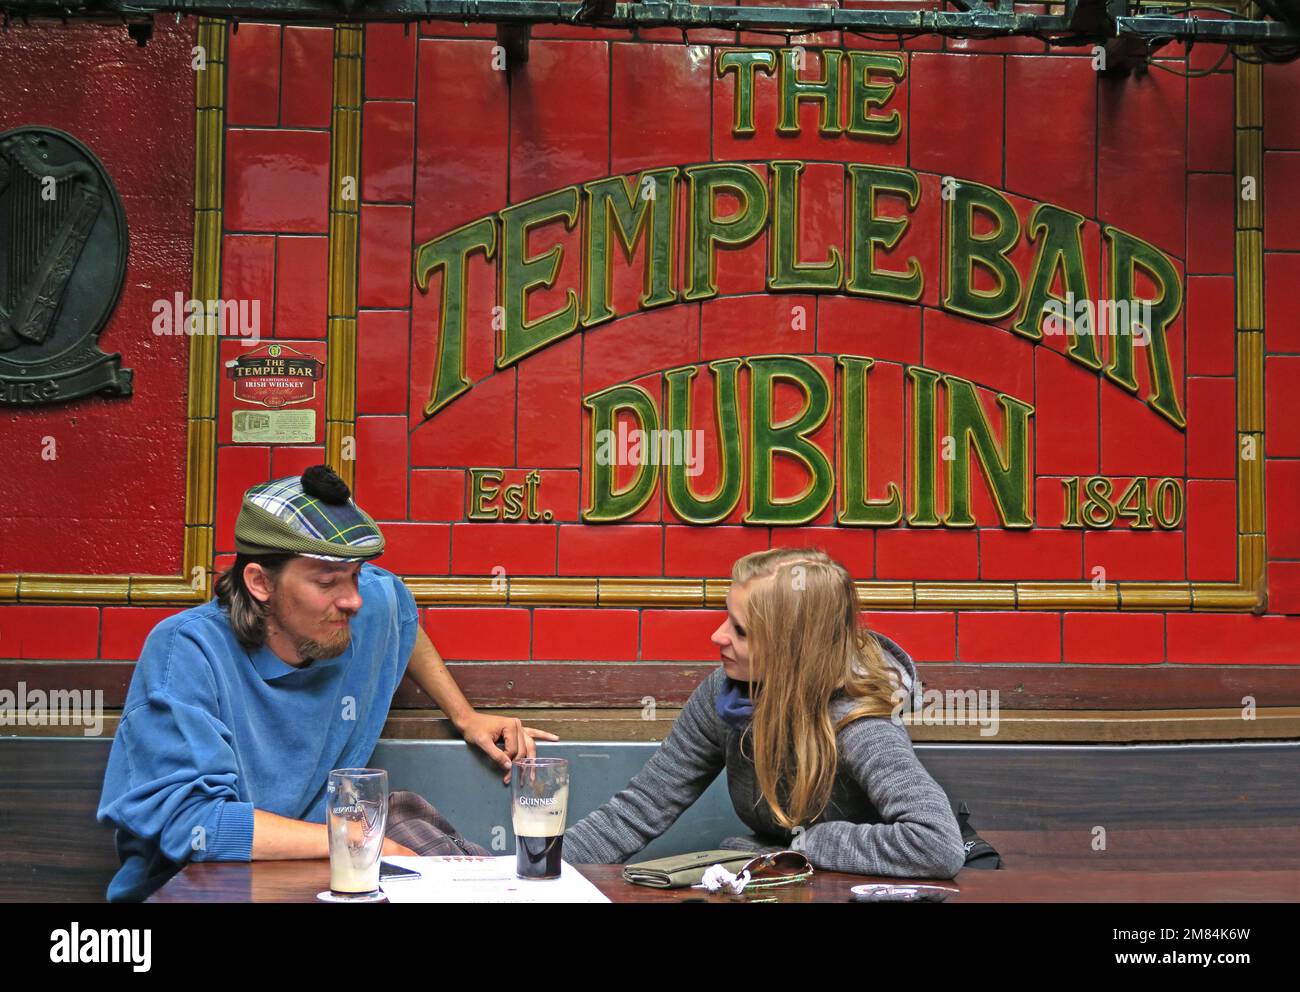 Coppia al Temple Bar, Dublino, Est 1840, 47-48 Temple Bar, Dublino 2, D02 N725, Eire, Irlanda Foto Stock